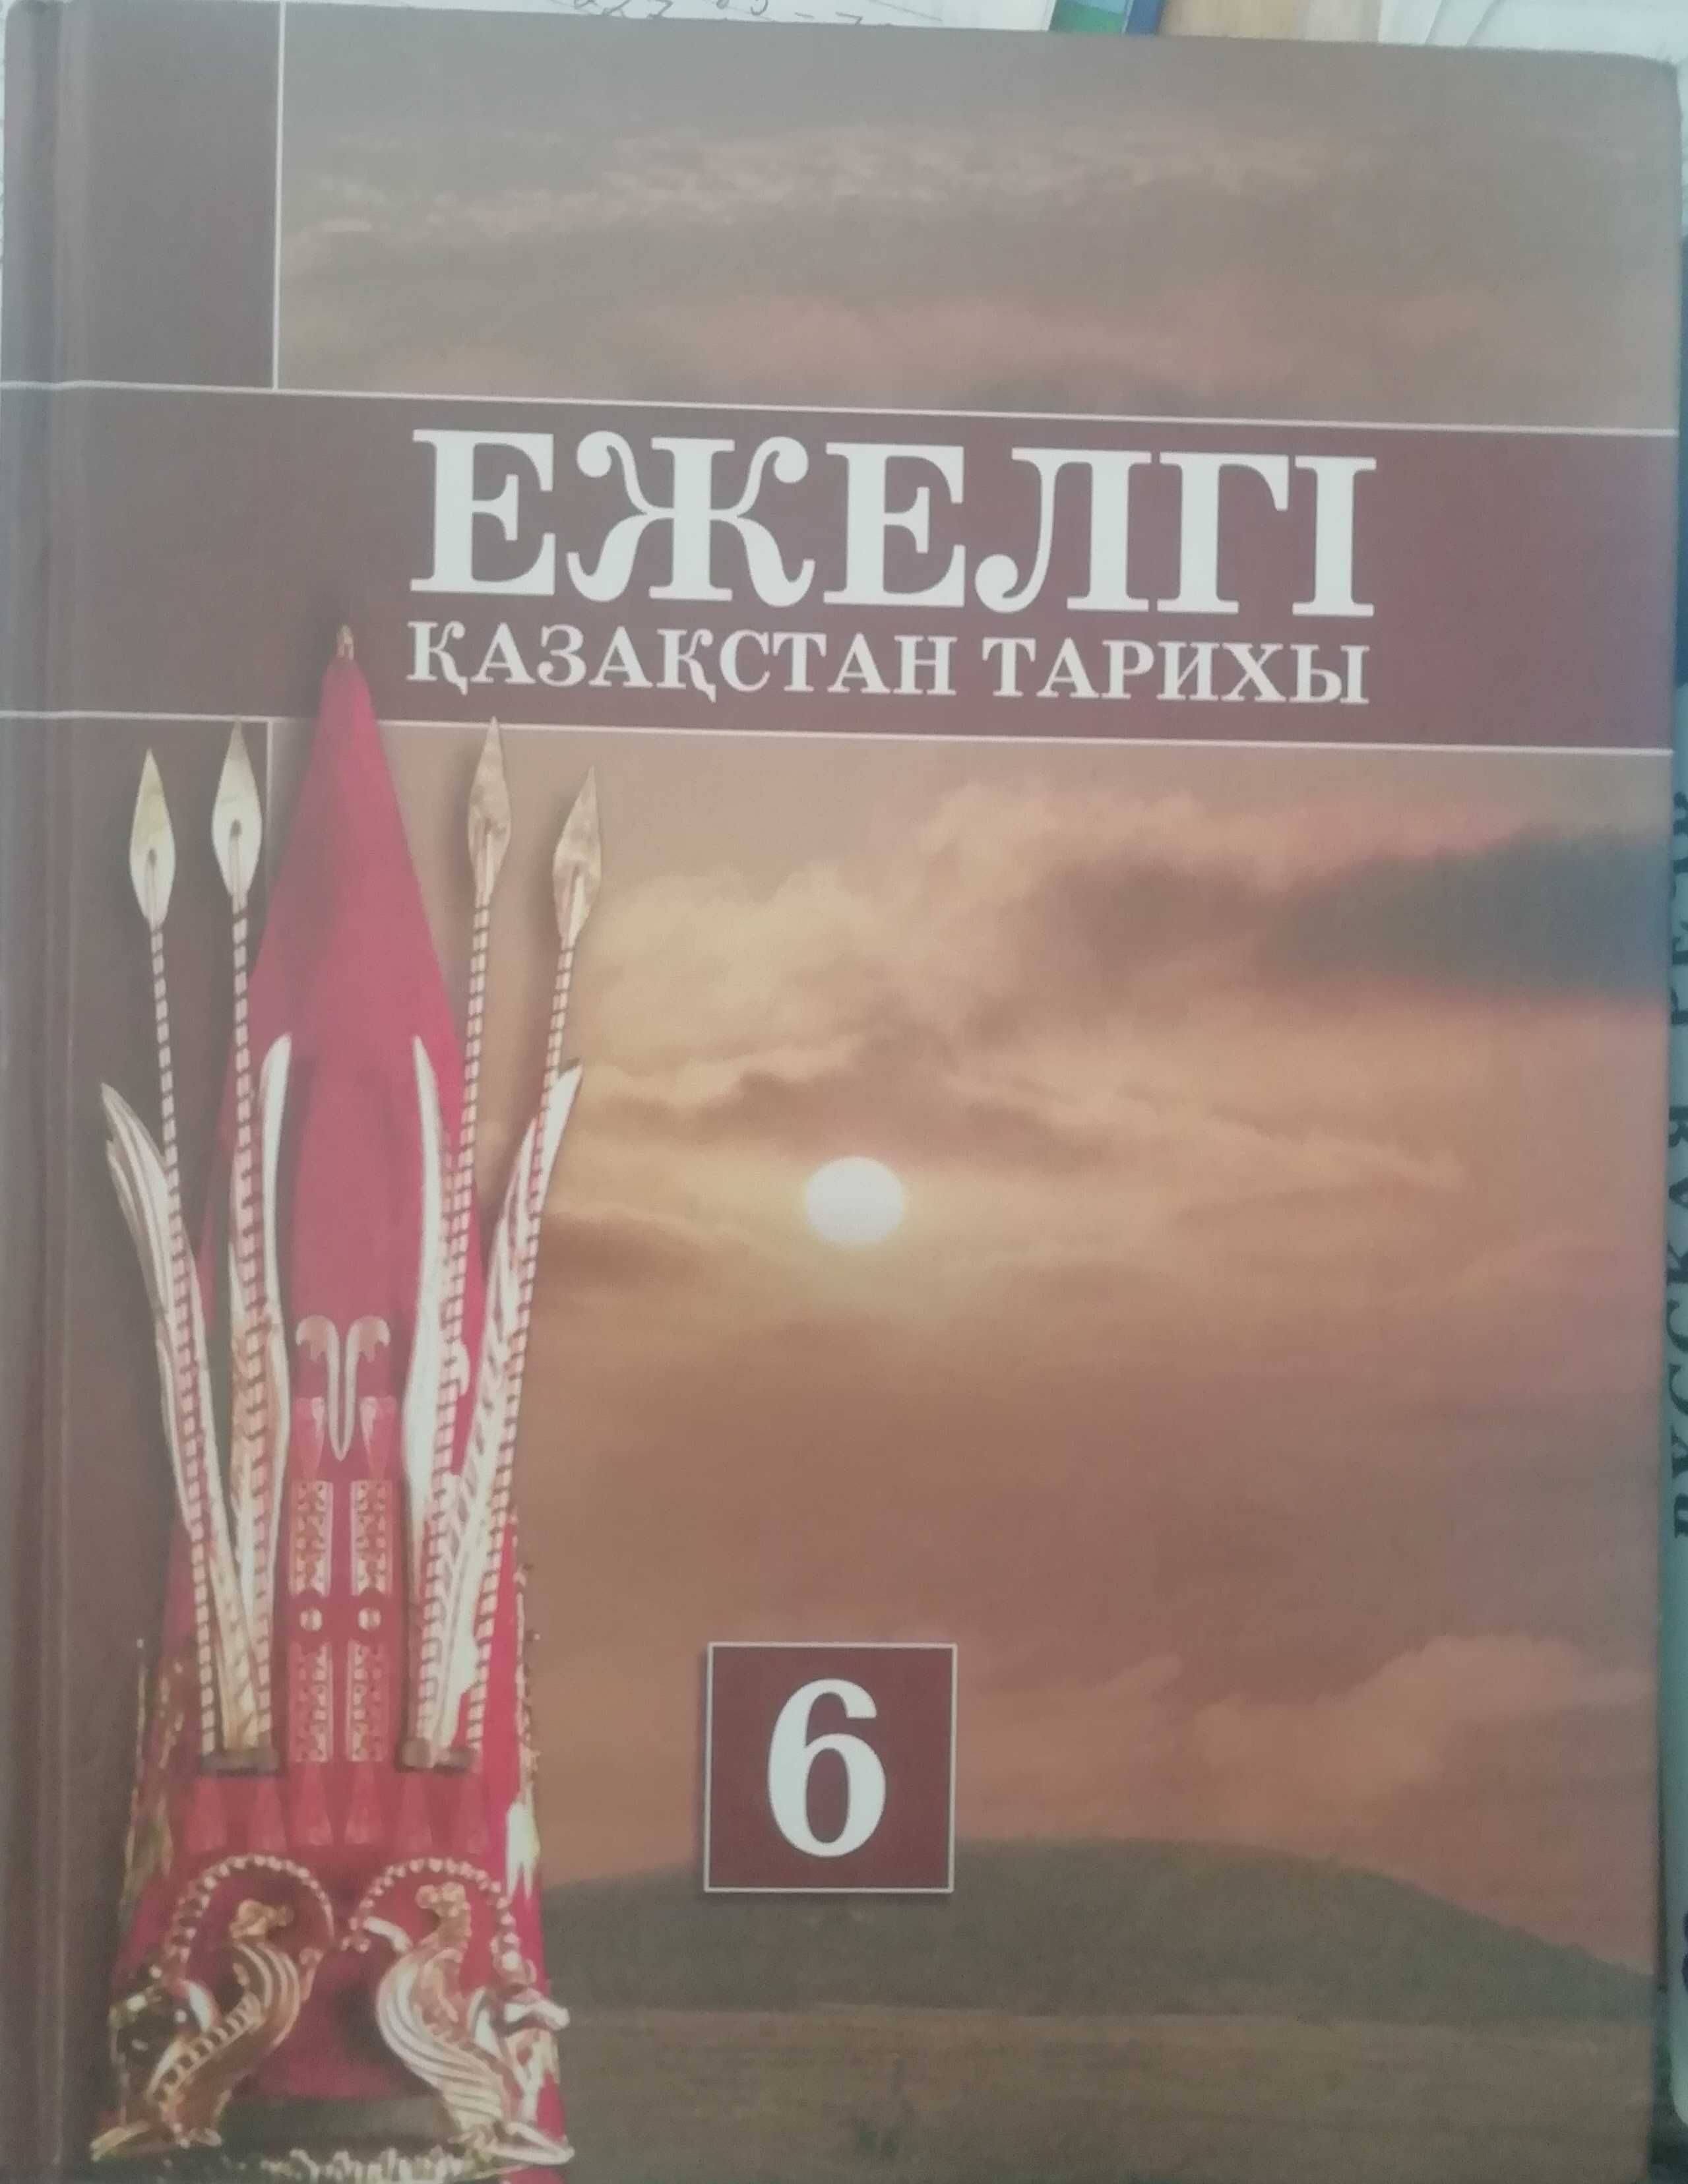 Учебник "Ежелгі Қазақстан тапихы" за 6 кл на казахском языке